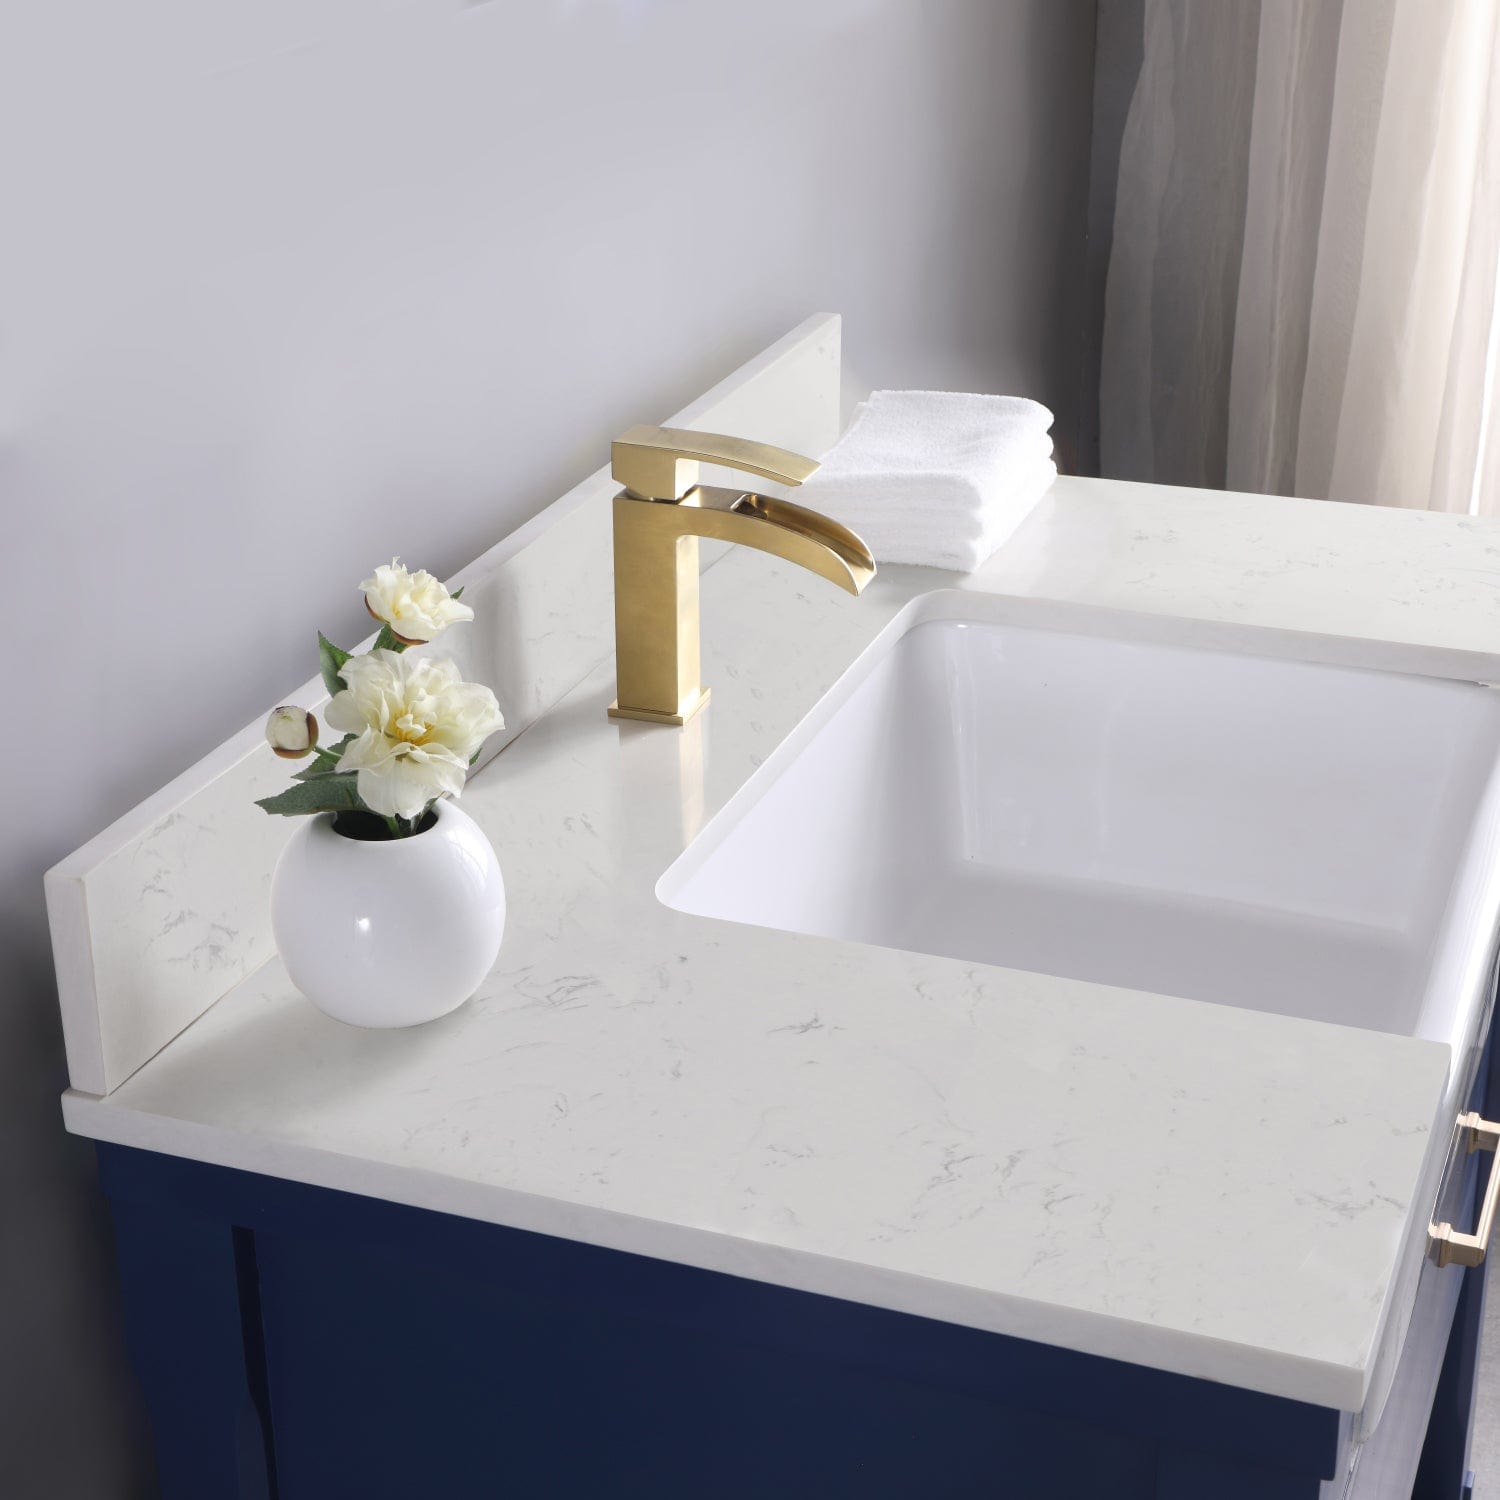 Altair Georgia 36" Single Bathroom Vanity Set in Jewelry Blue and Composite Carrara White Stone Top with White Farmhouse Basin without Mirror 537036-JB-AW-NM - Molaix631112970563Vanity537036-JB-AW-NM